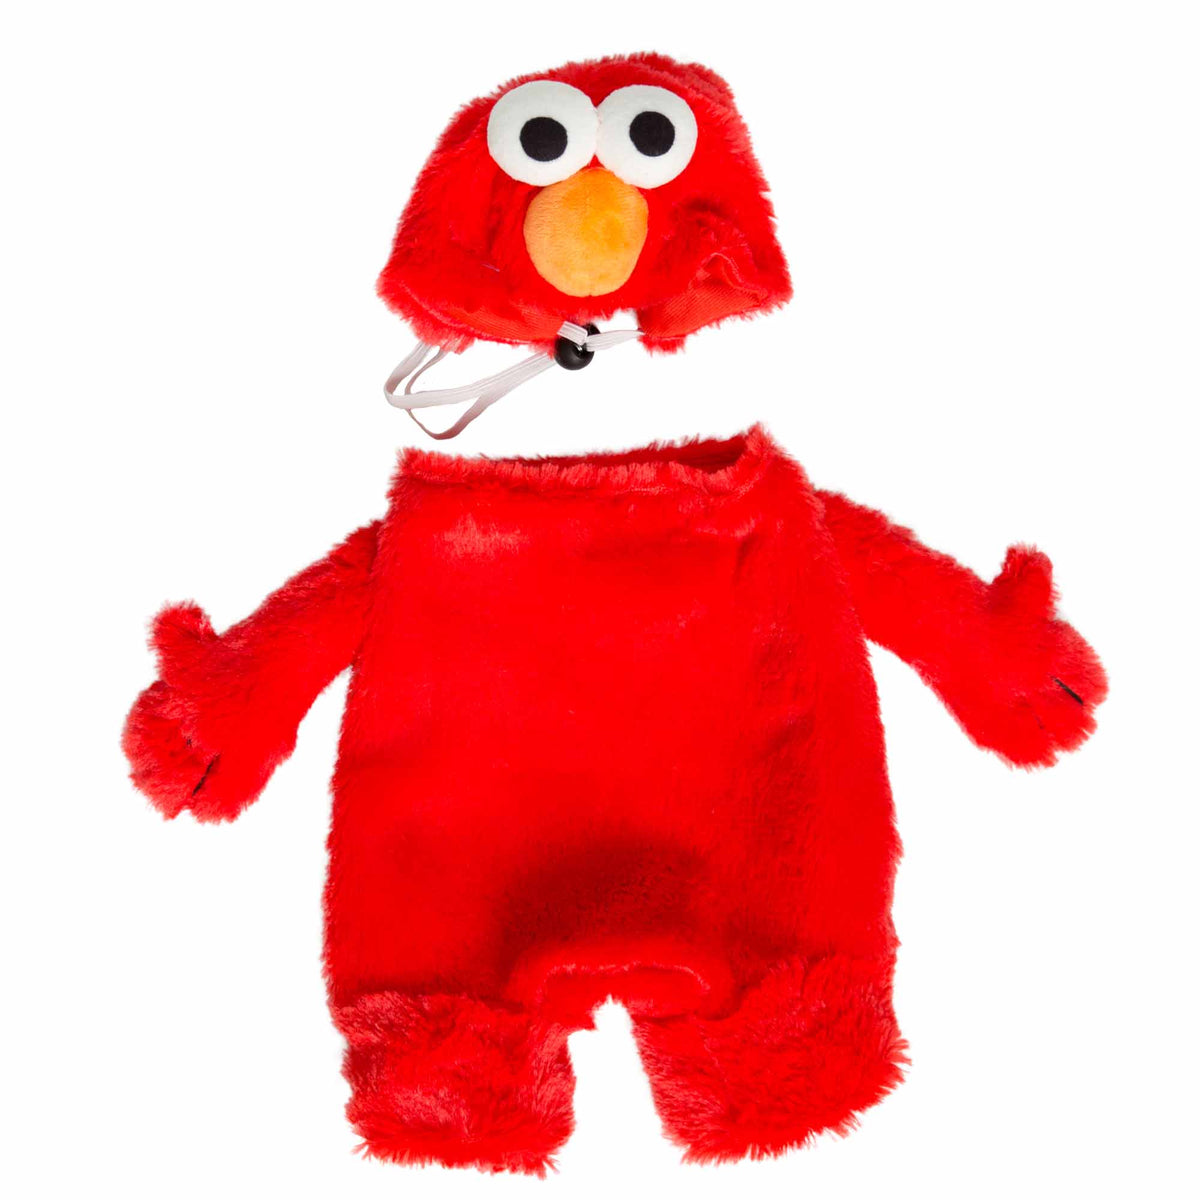 Elmo licensed Pet Costume - 3 Red Rovers